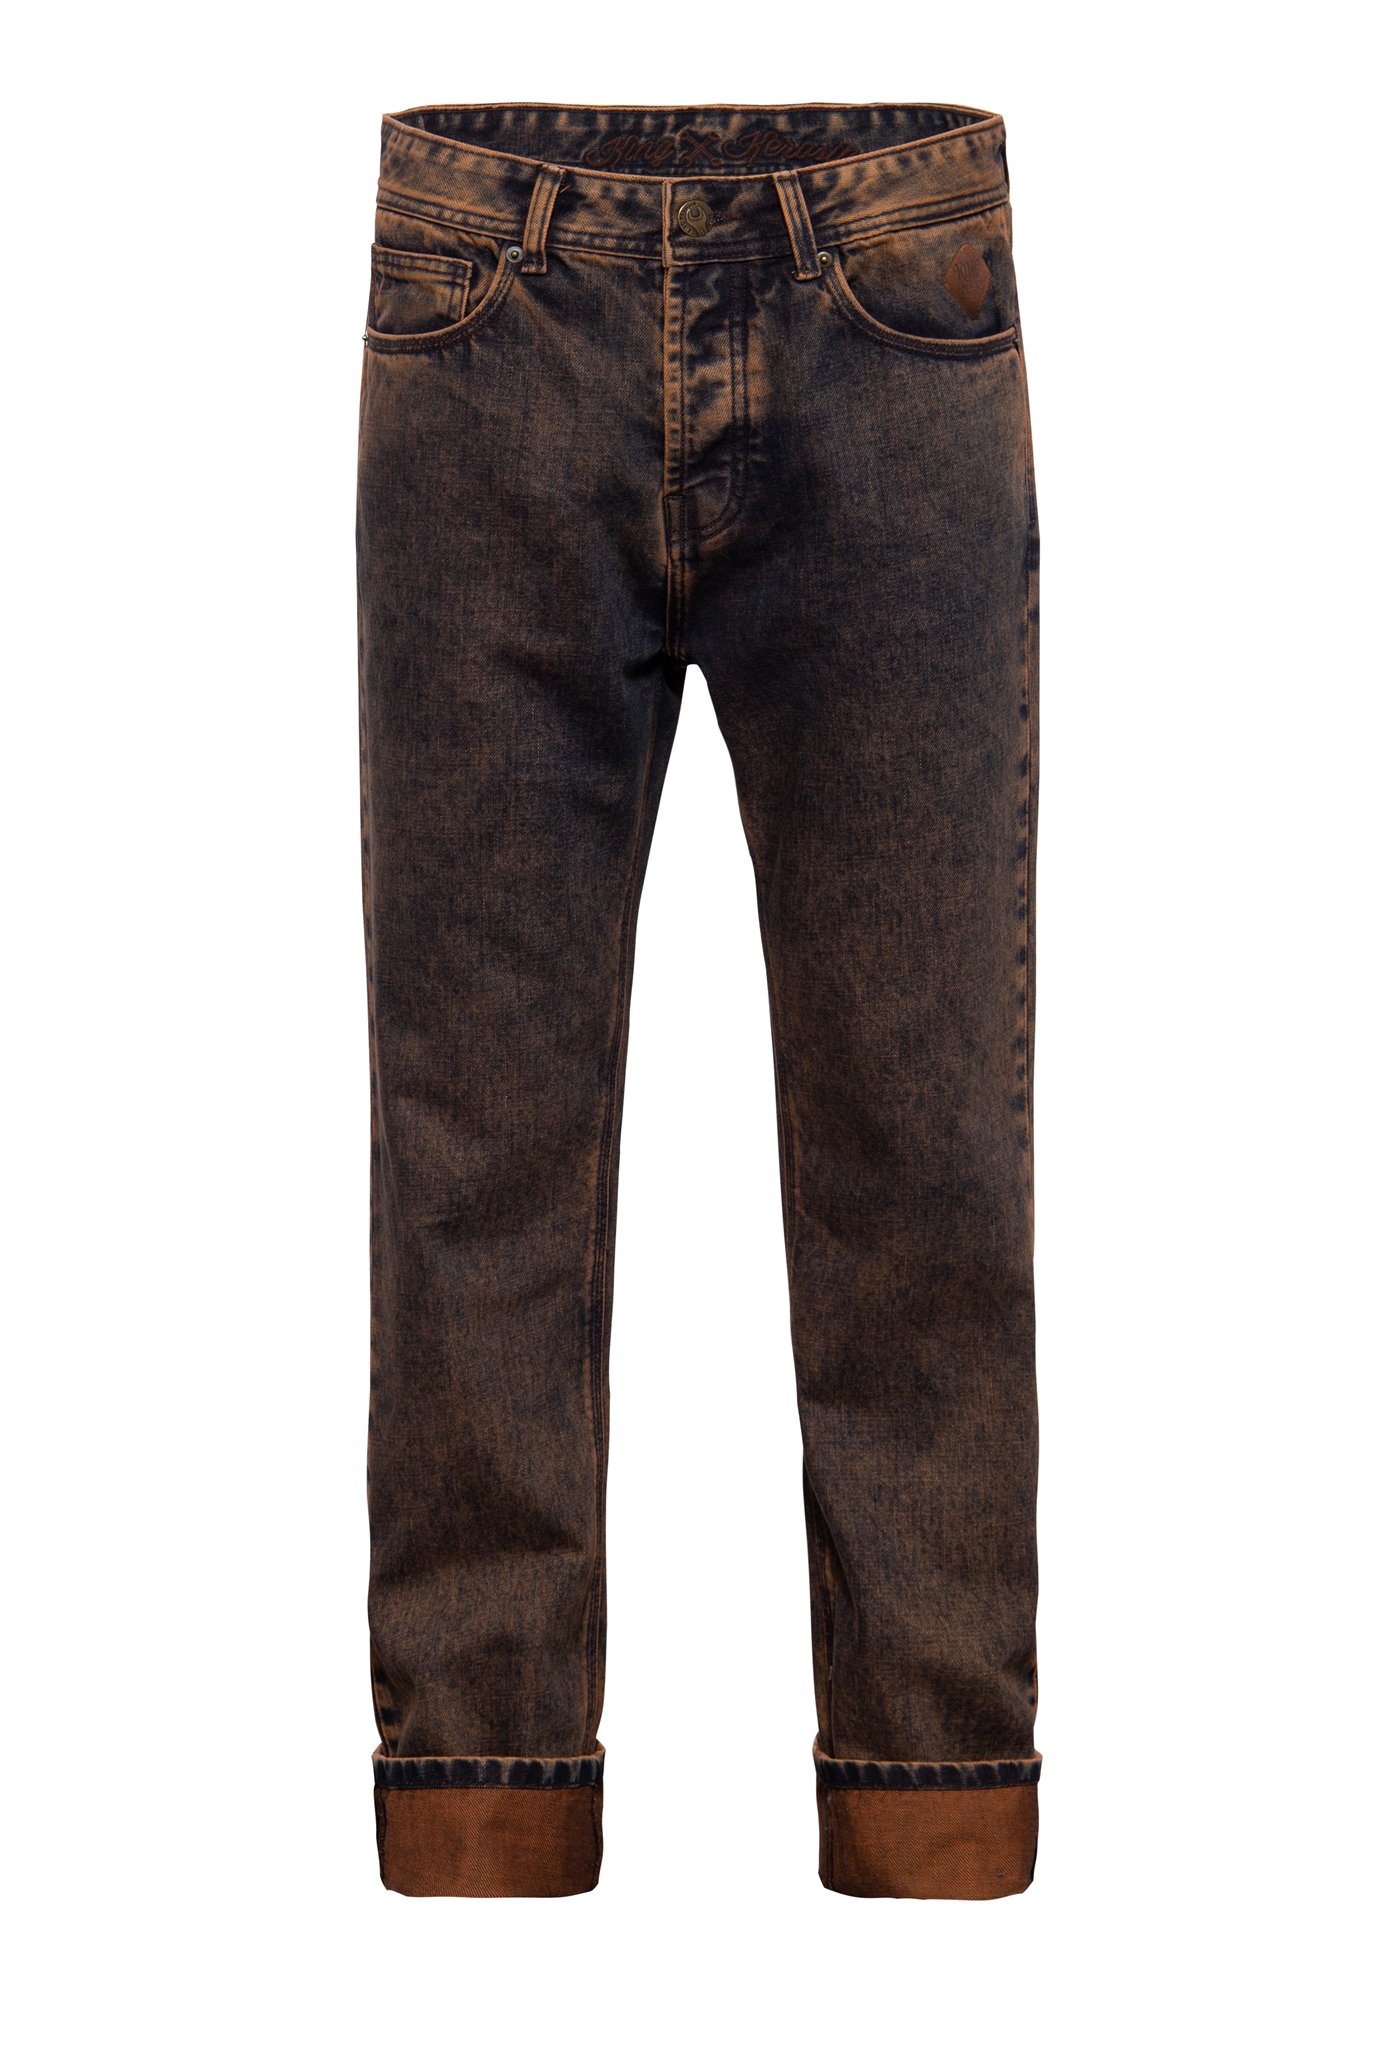 King Kerosin 5-Pocket Jeans Dirt Washed - Scott 32/32